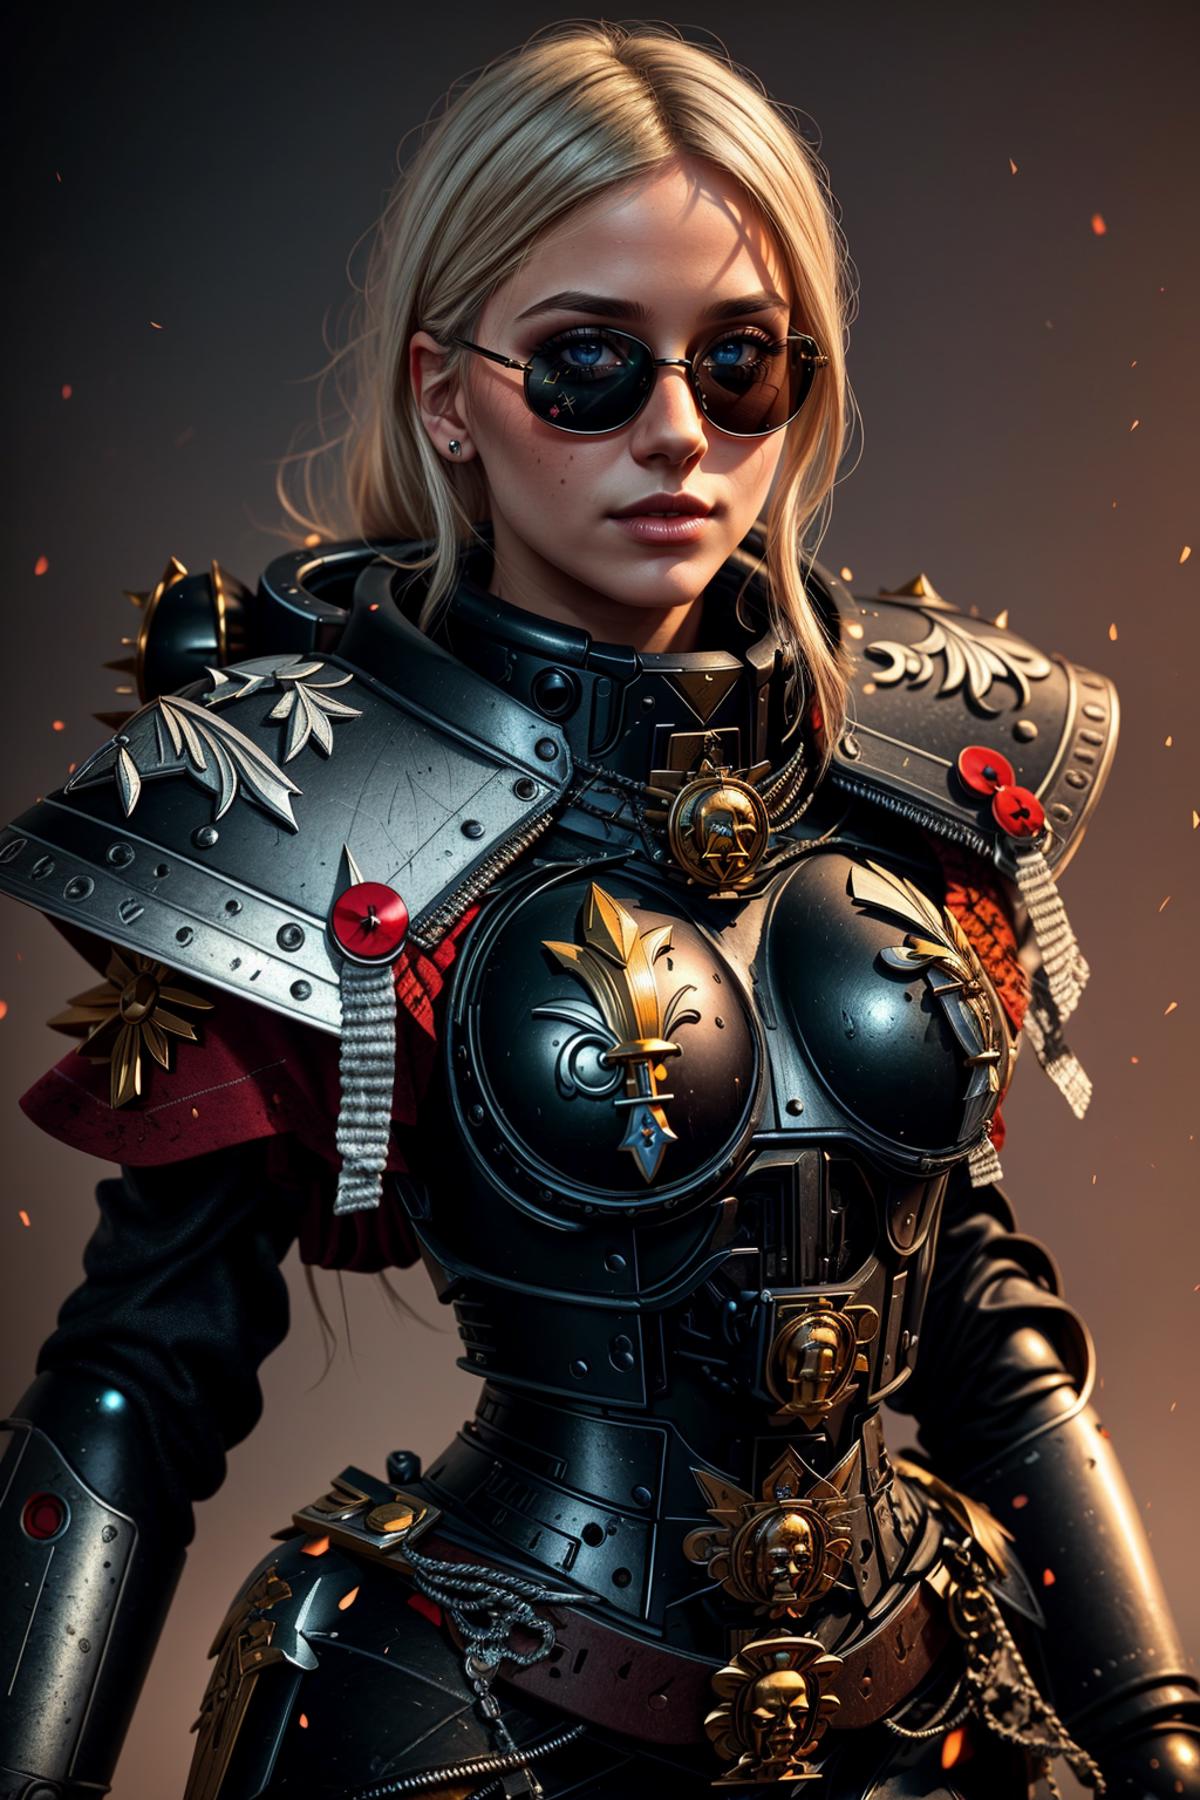 Warhammer 40K Adepta Sororitas Sister of Battle armor - by EDG image by EDG